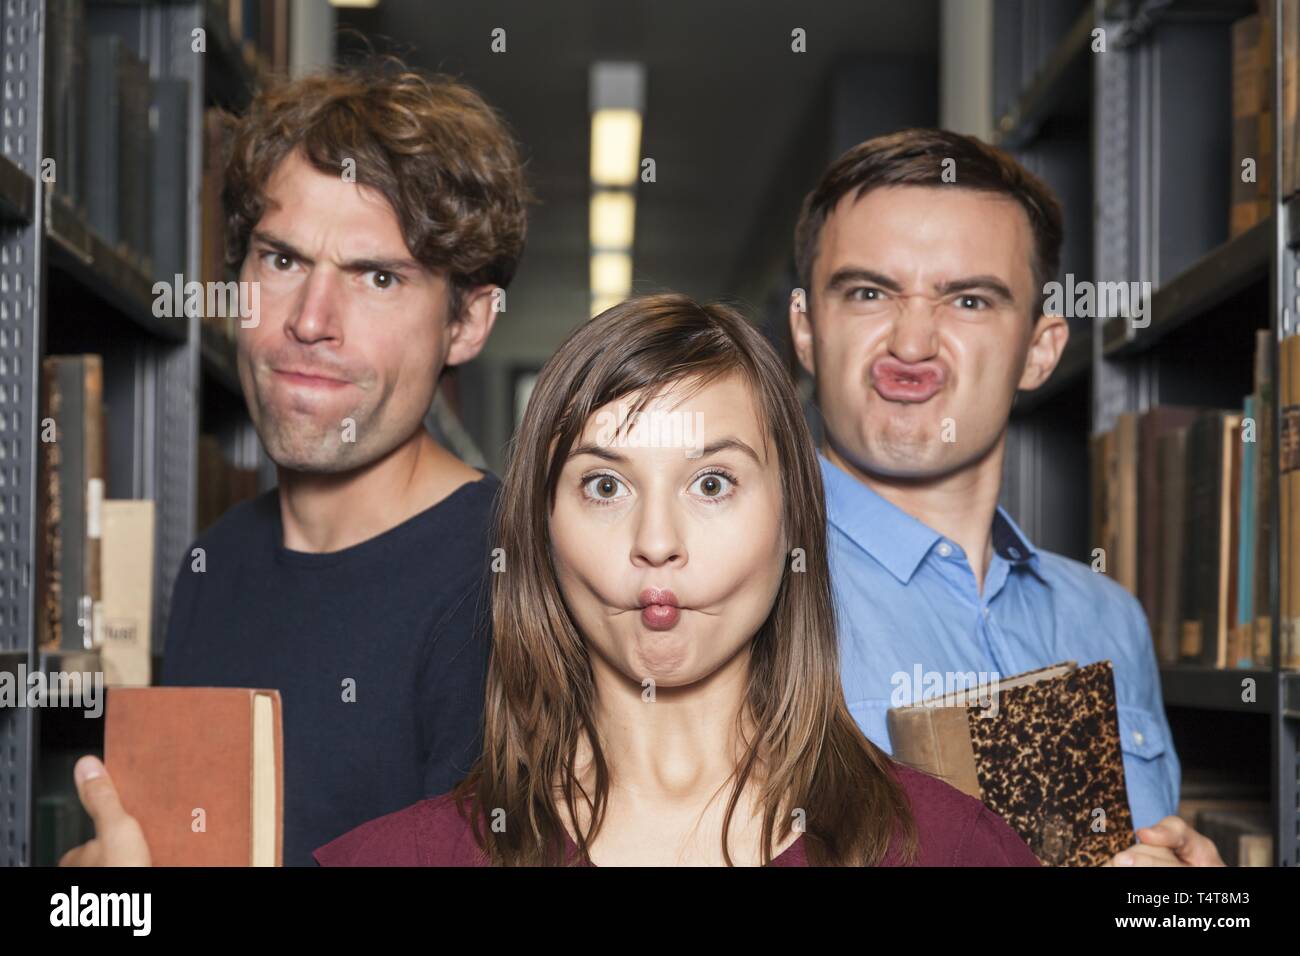 Tre studenti in biblioteca grimace di trazione Foto Stock